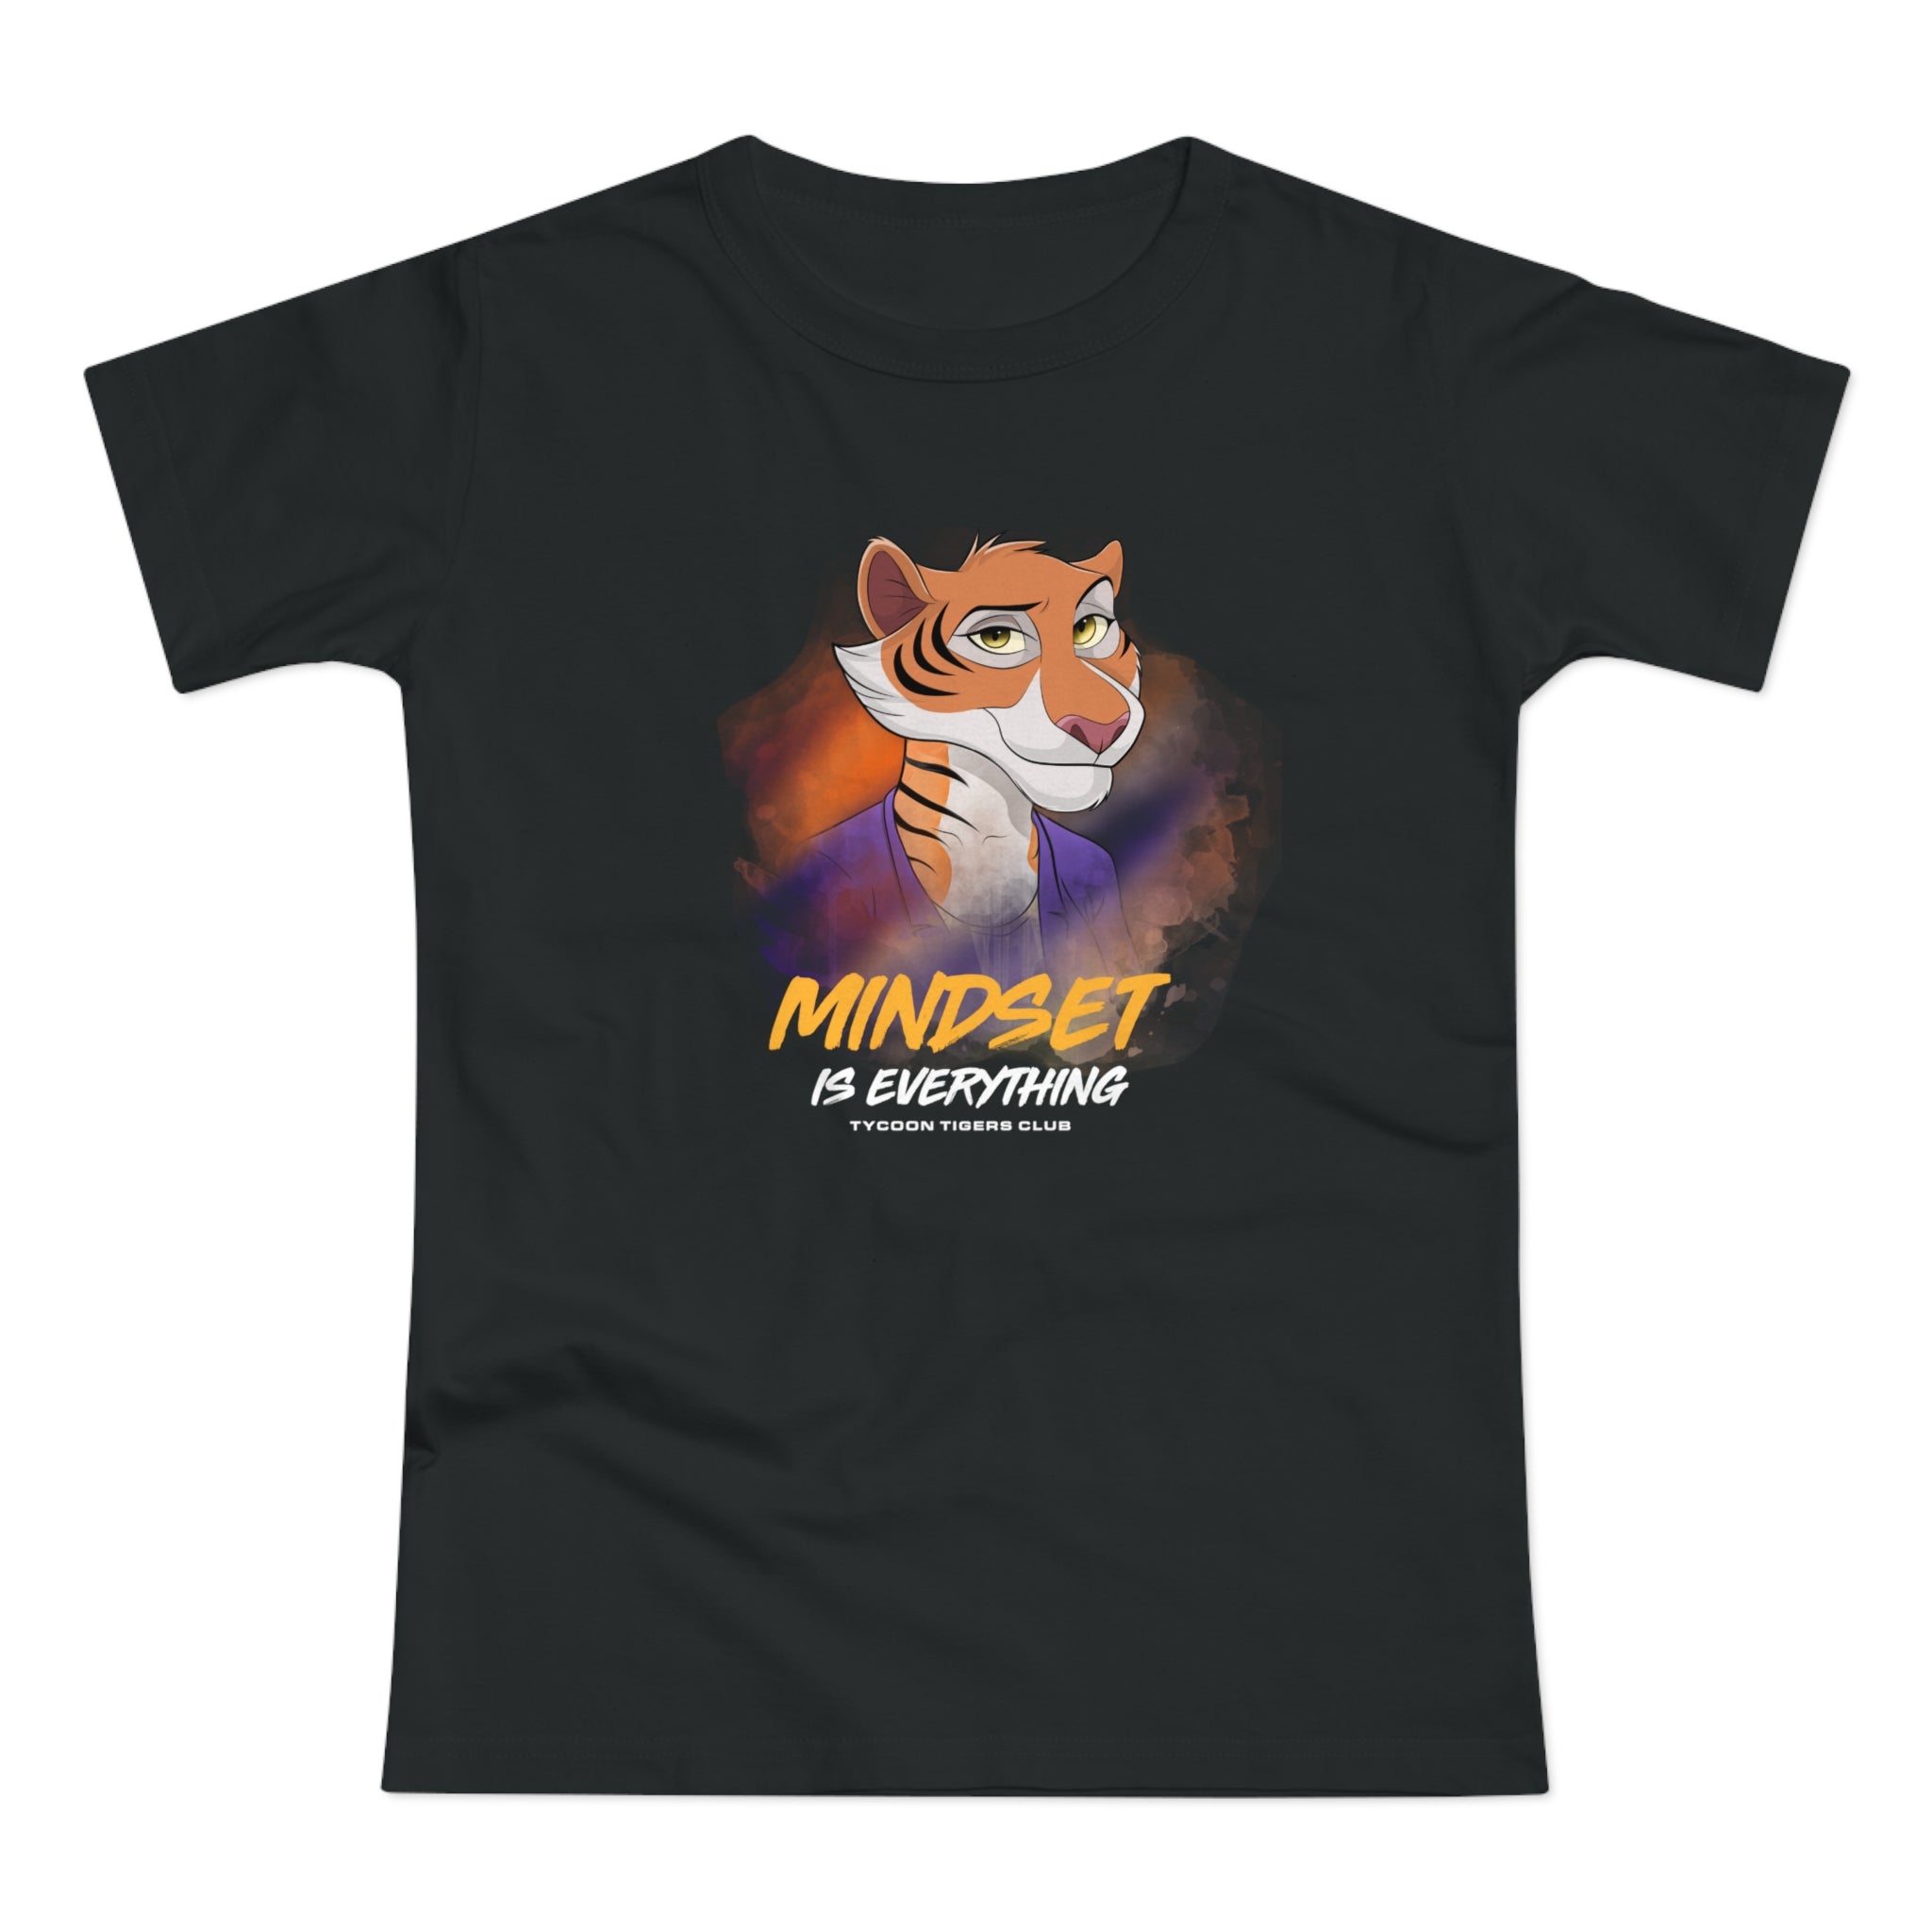 Mindset is everything - T-Shirt